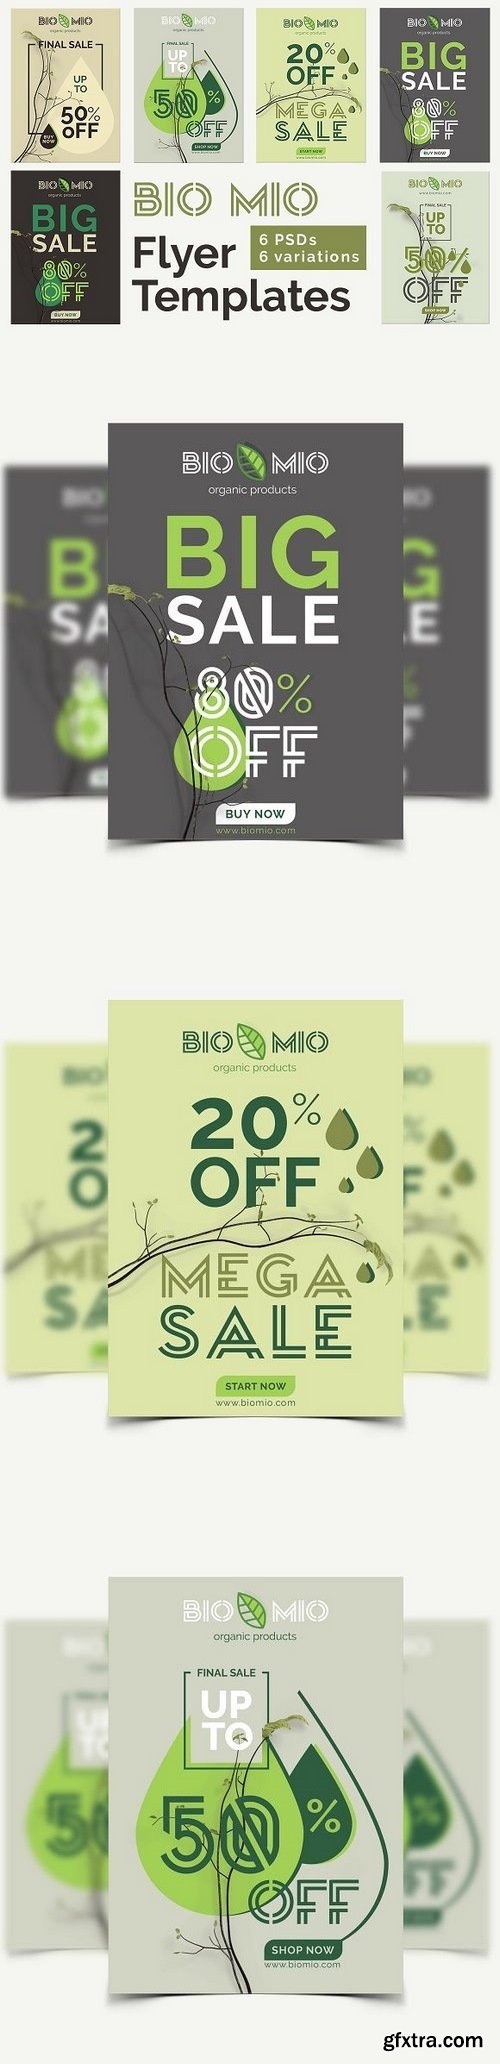 CM - Bio Mio Promotional Flyer Templates 1338575